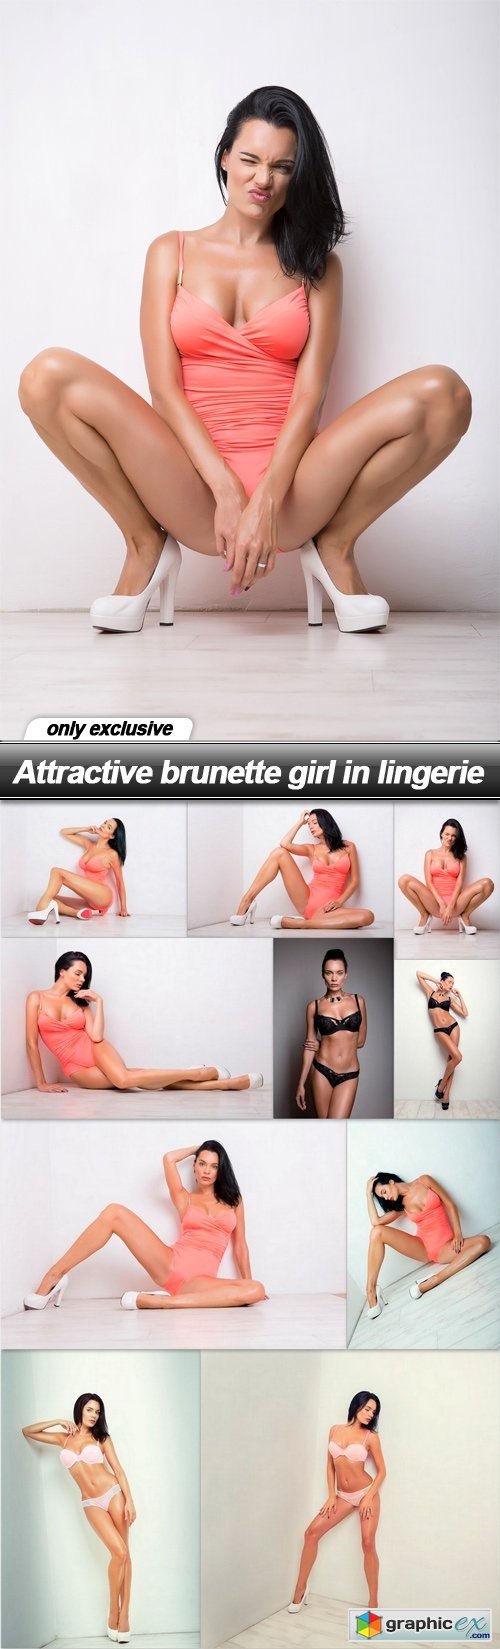 Attractive brunette girl in lingerie - 10 UHQ JPEG